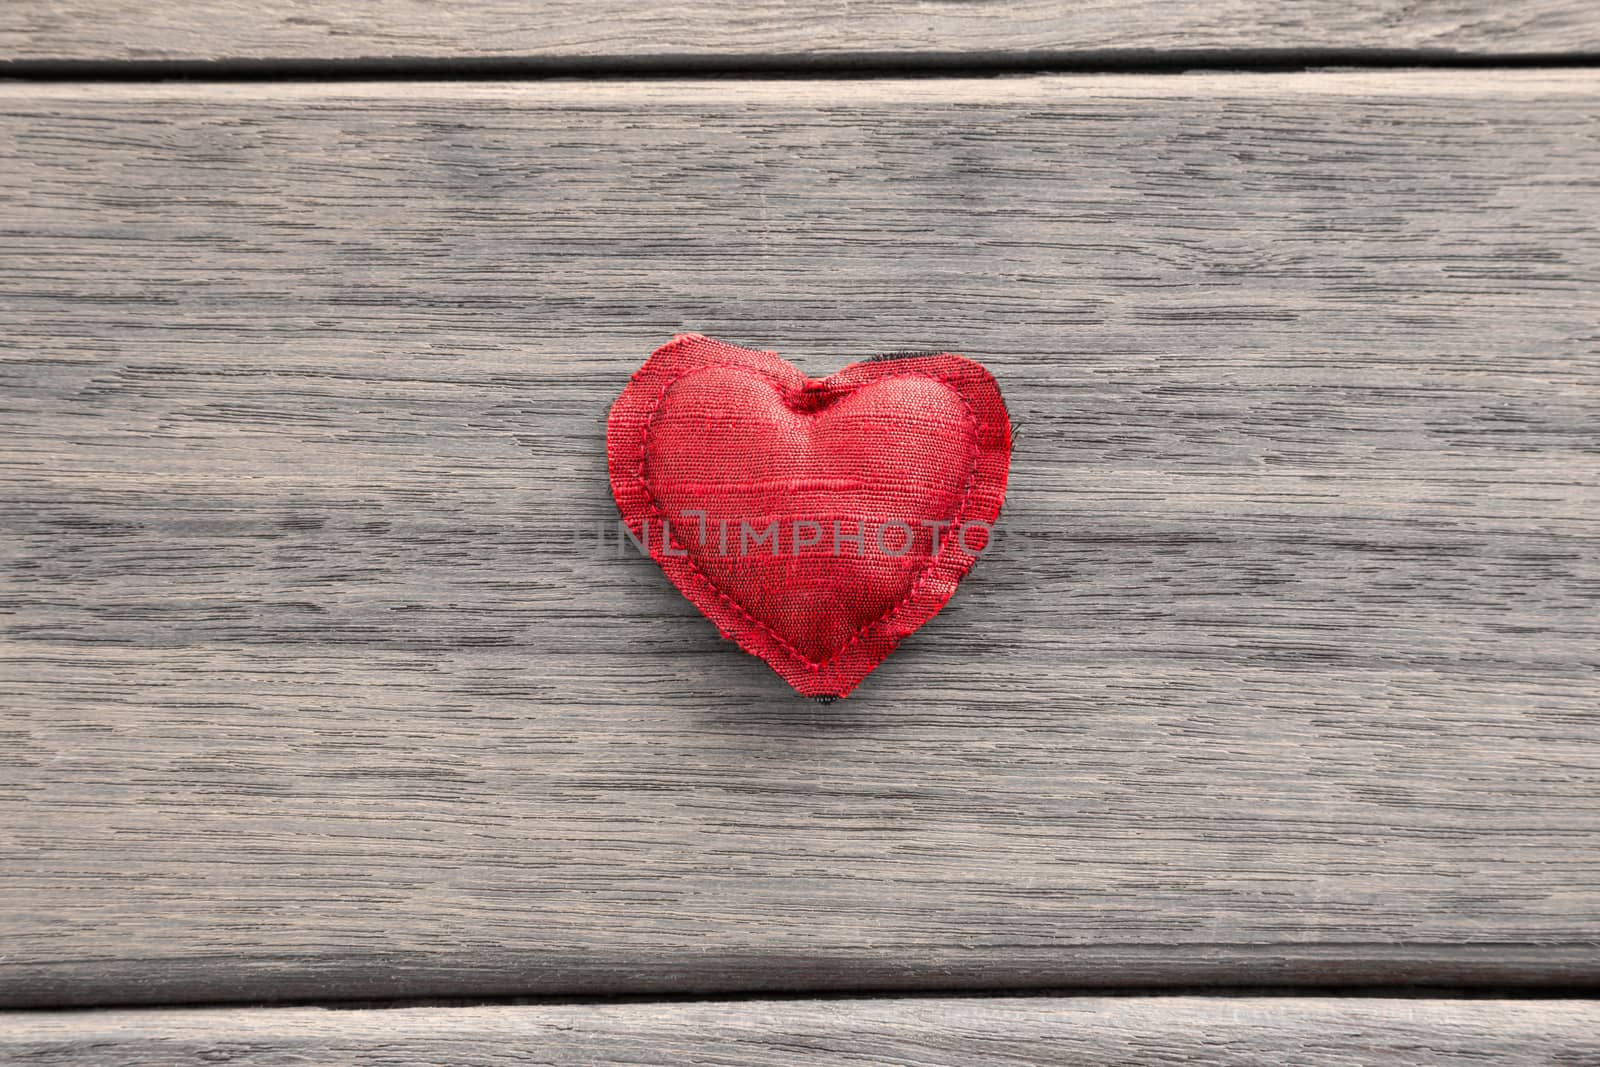 Red valentine heart symbol on wood background by vinnstock